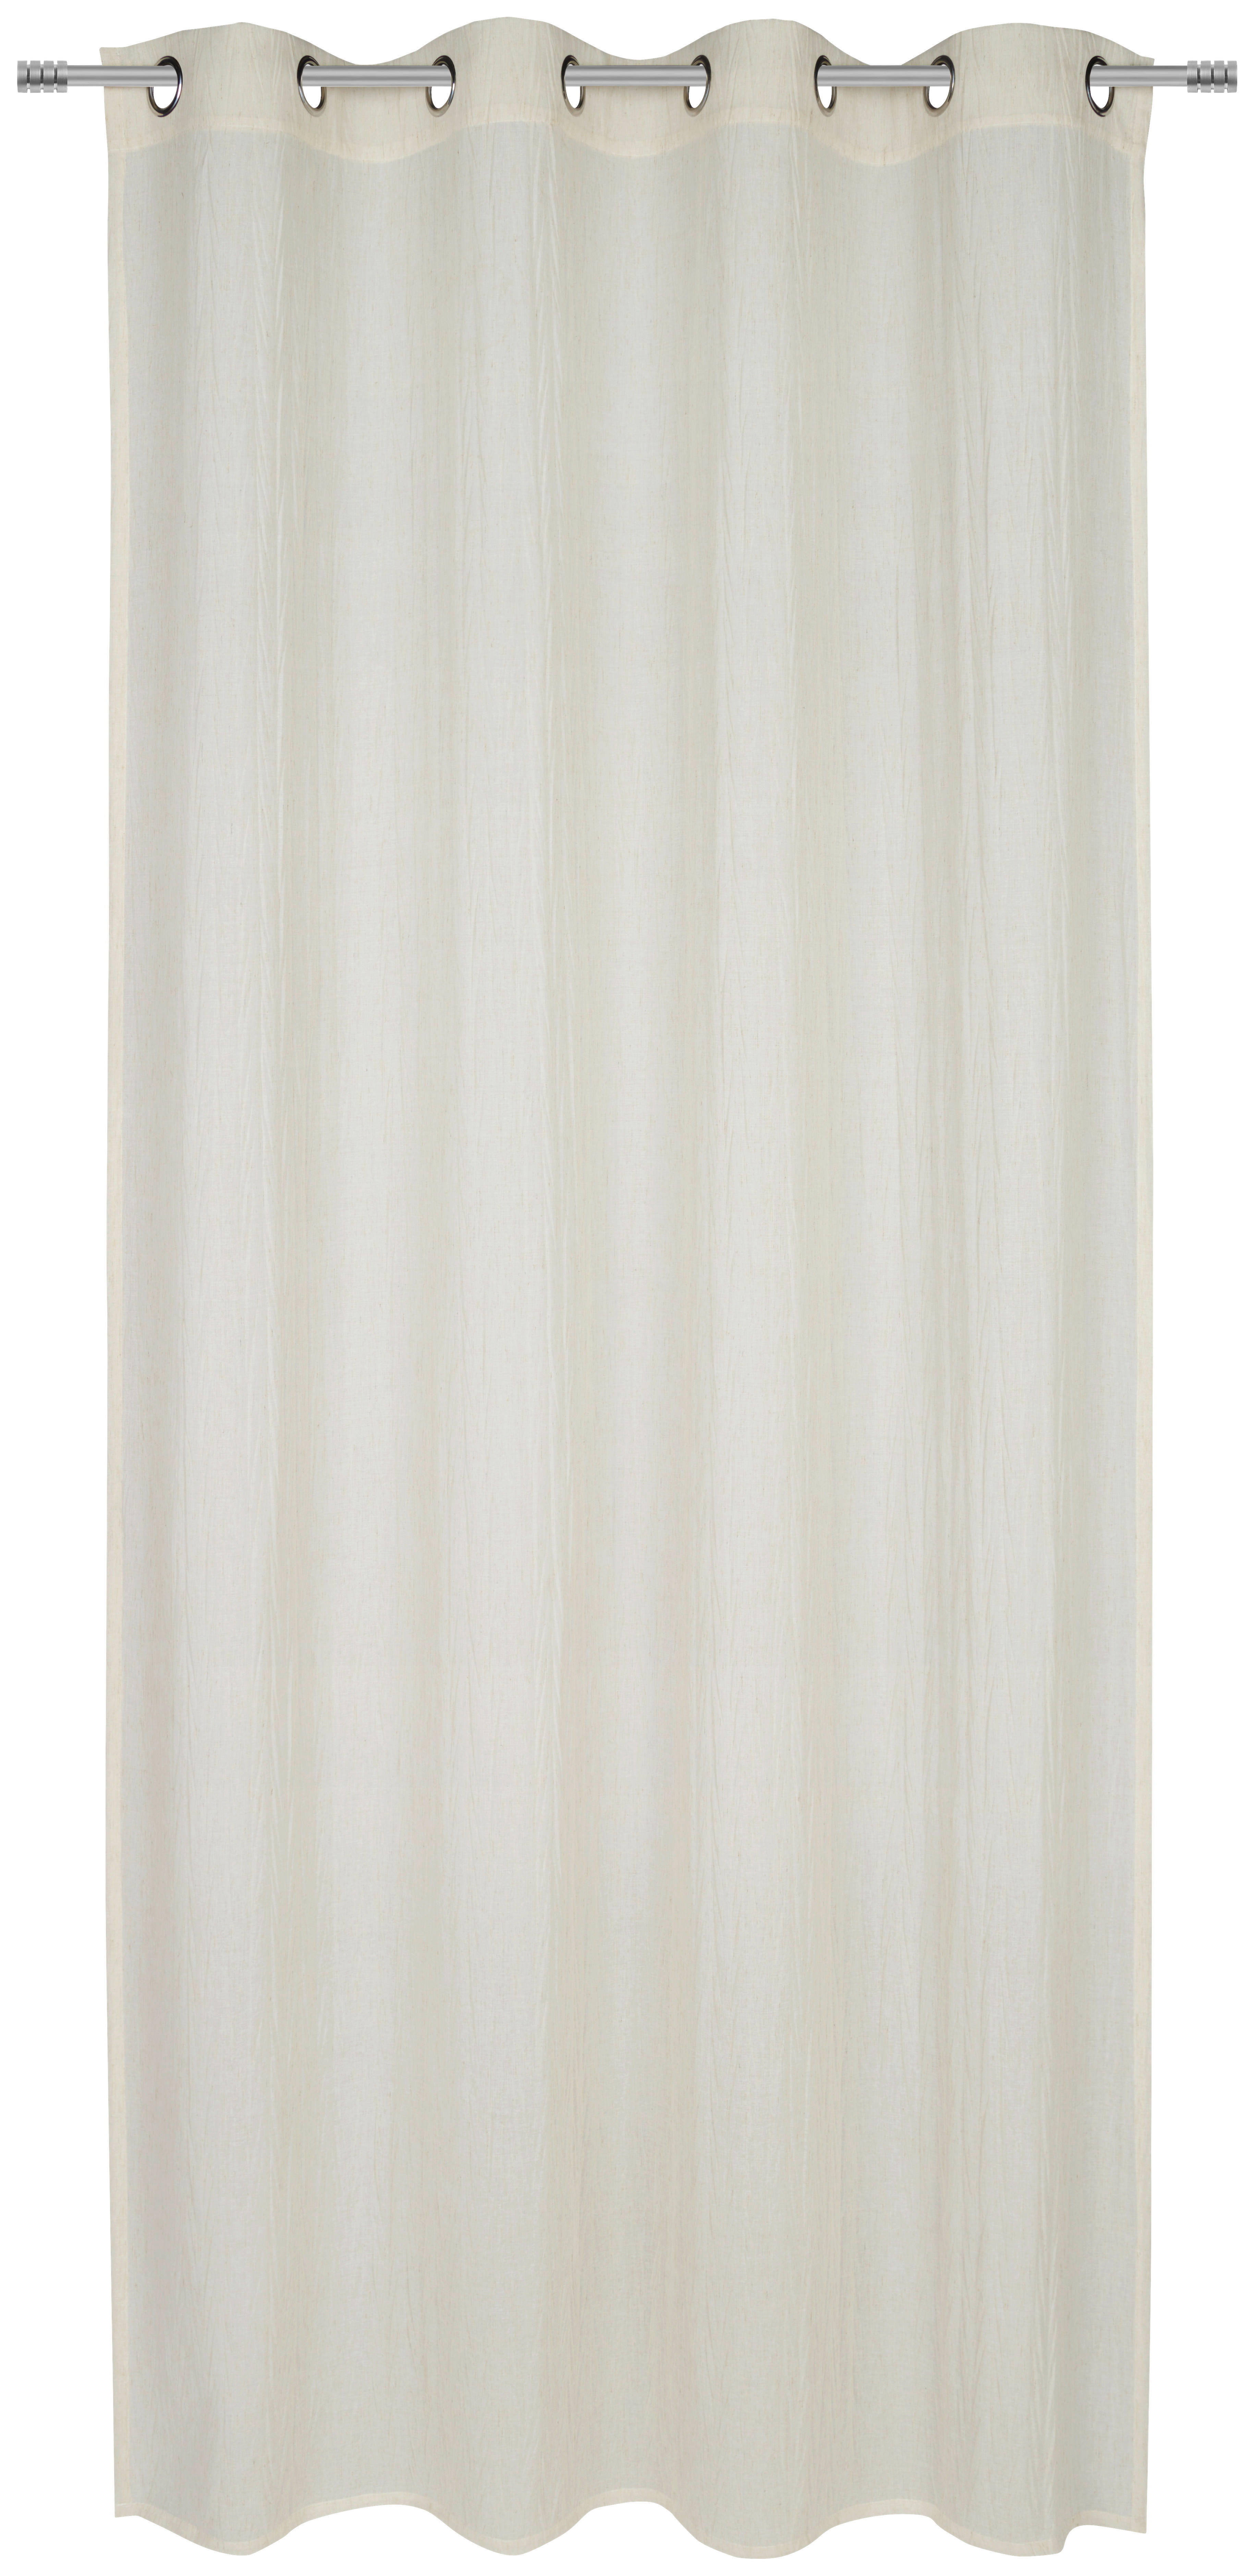 ÖLJETTLÄNGD transparent  - naturfärgad, Basics, textil (140/245cm) - Esposa